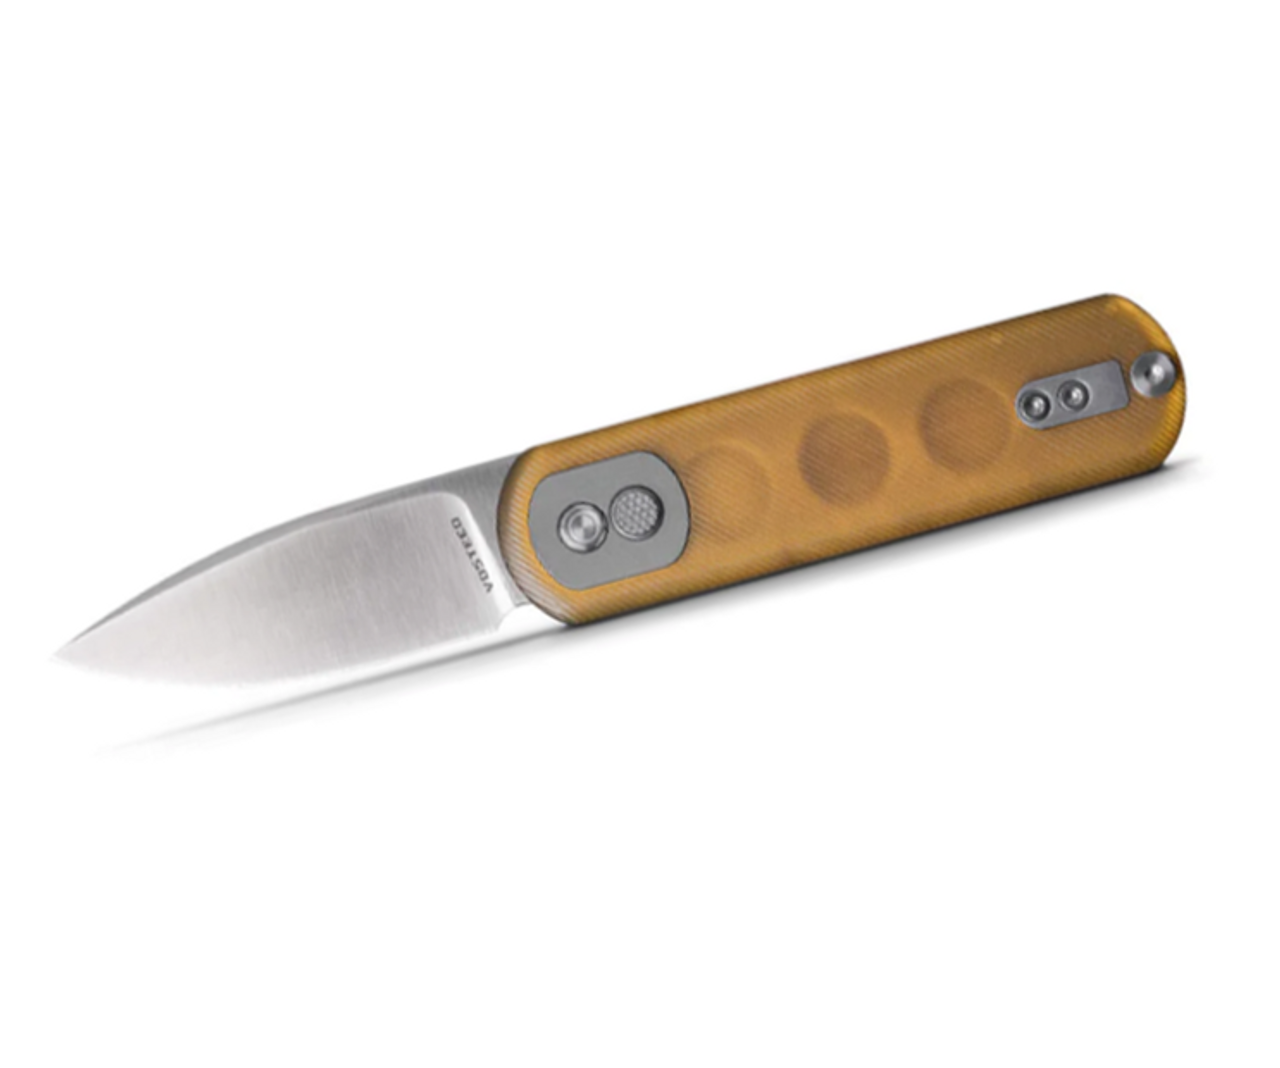 Vosteed Corgi Pup- Trek Lock Knife (2.37" S35VN Blade & PEI Handle) - A0723